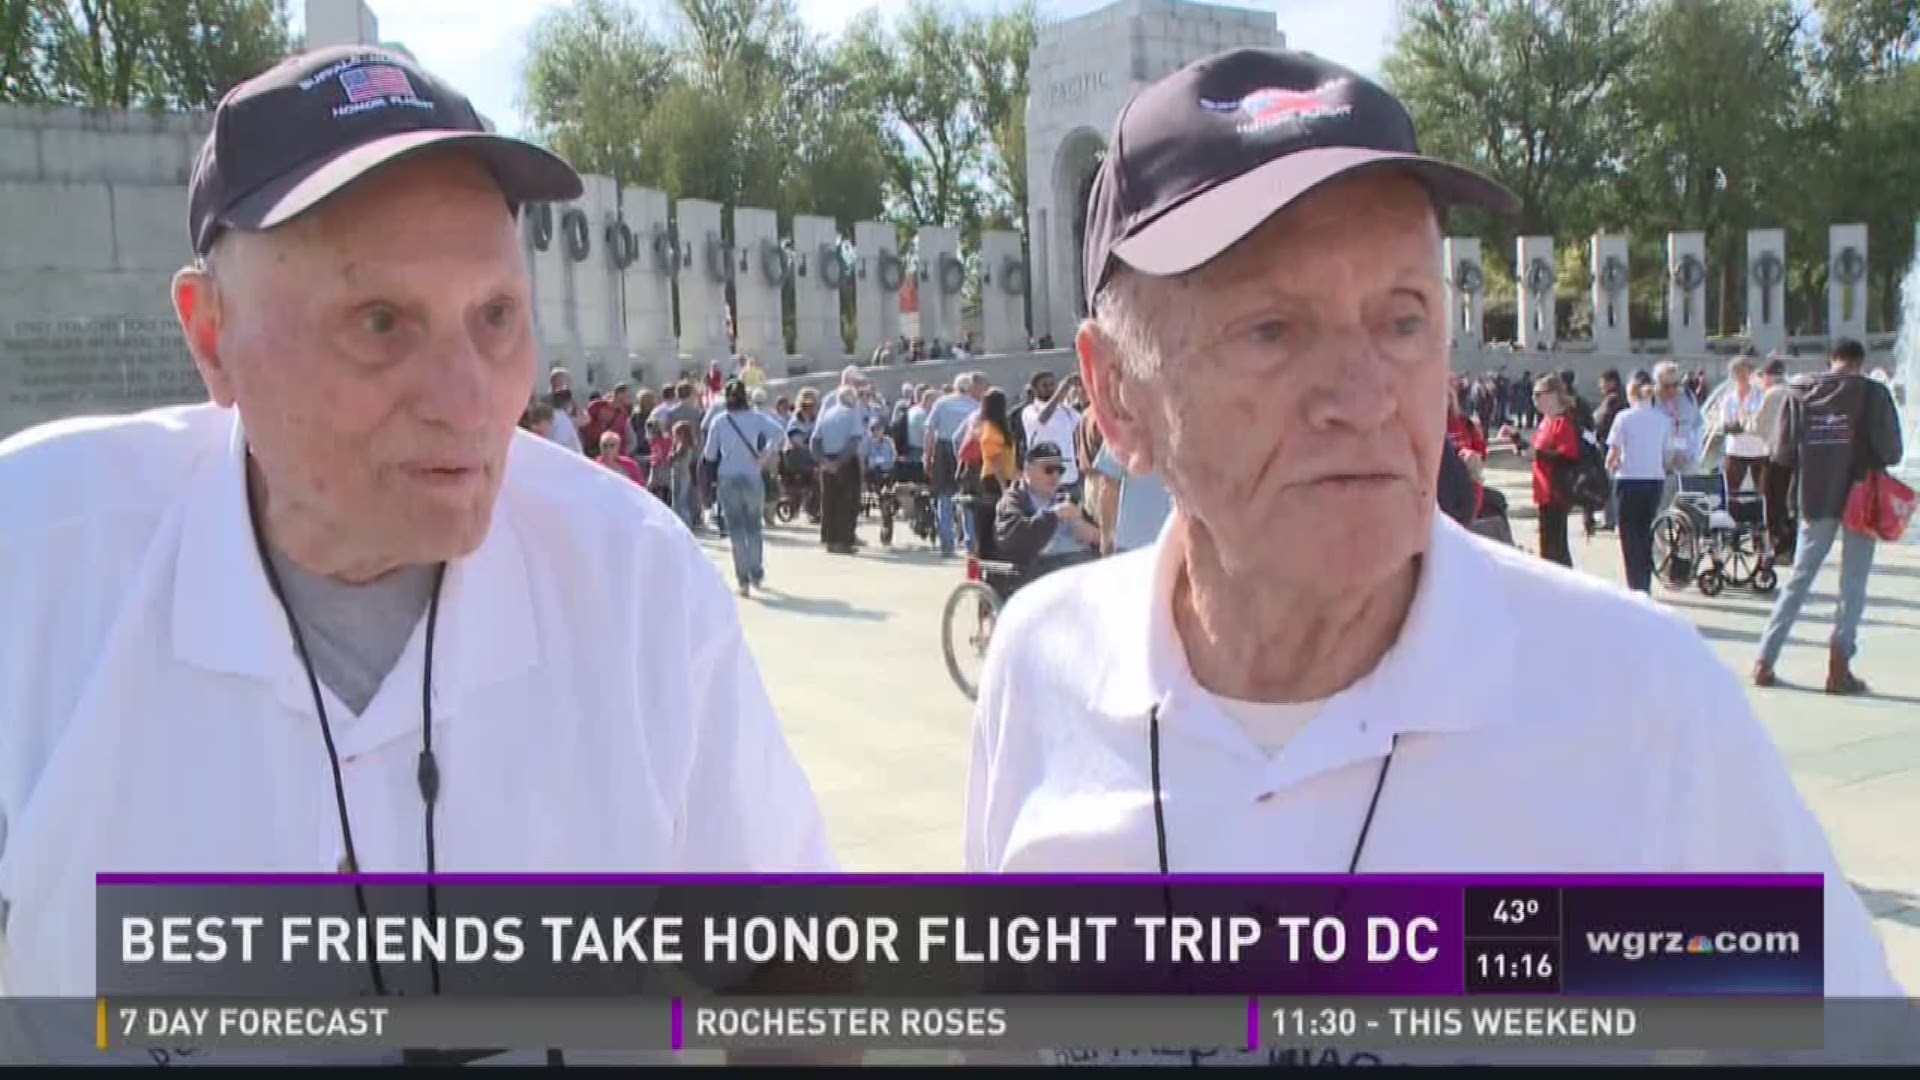 Best friends take honor flight trip to DC